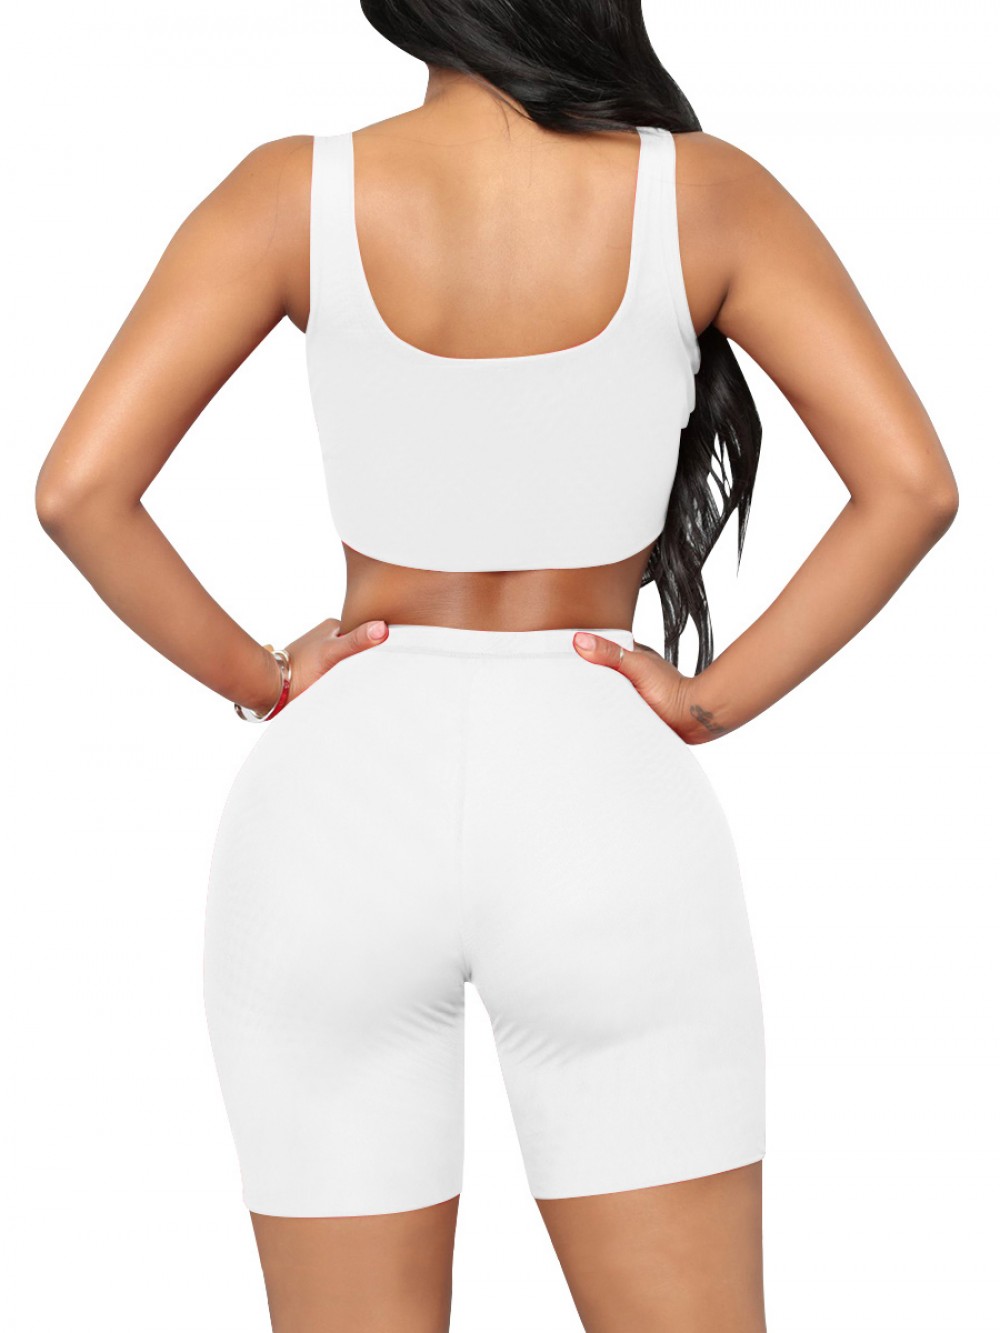 Stylish White Cropped Sports Shorts Suit High Waist Unique